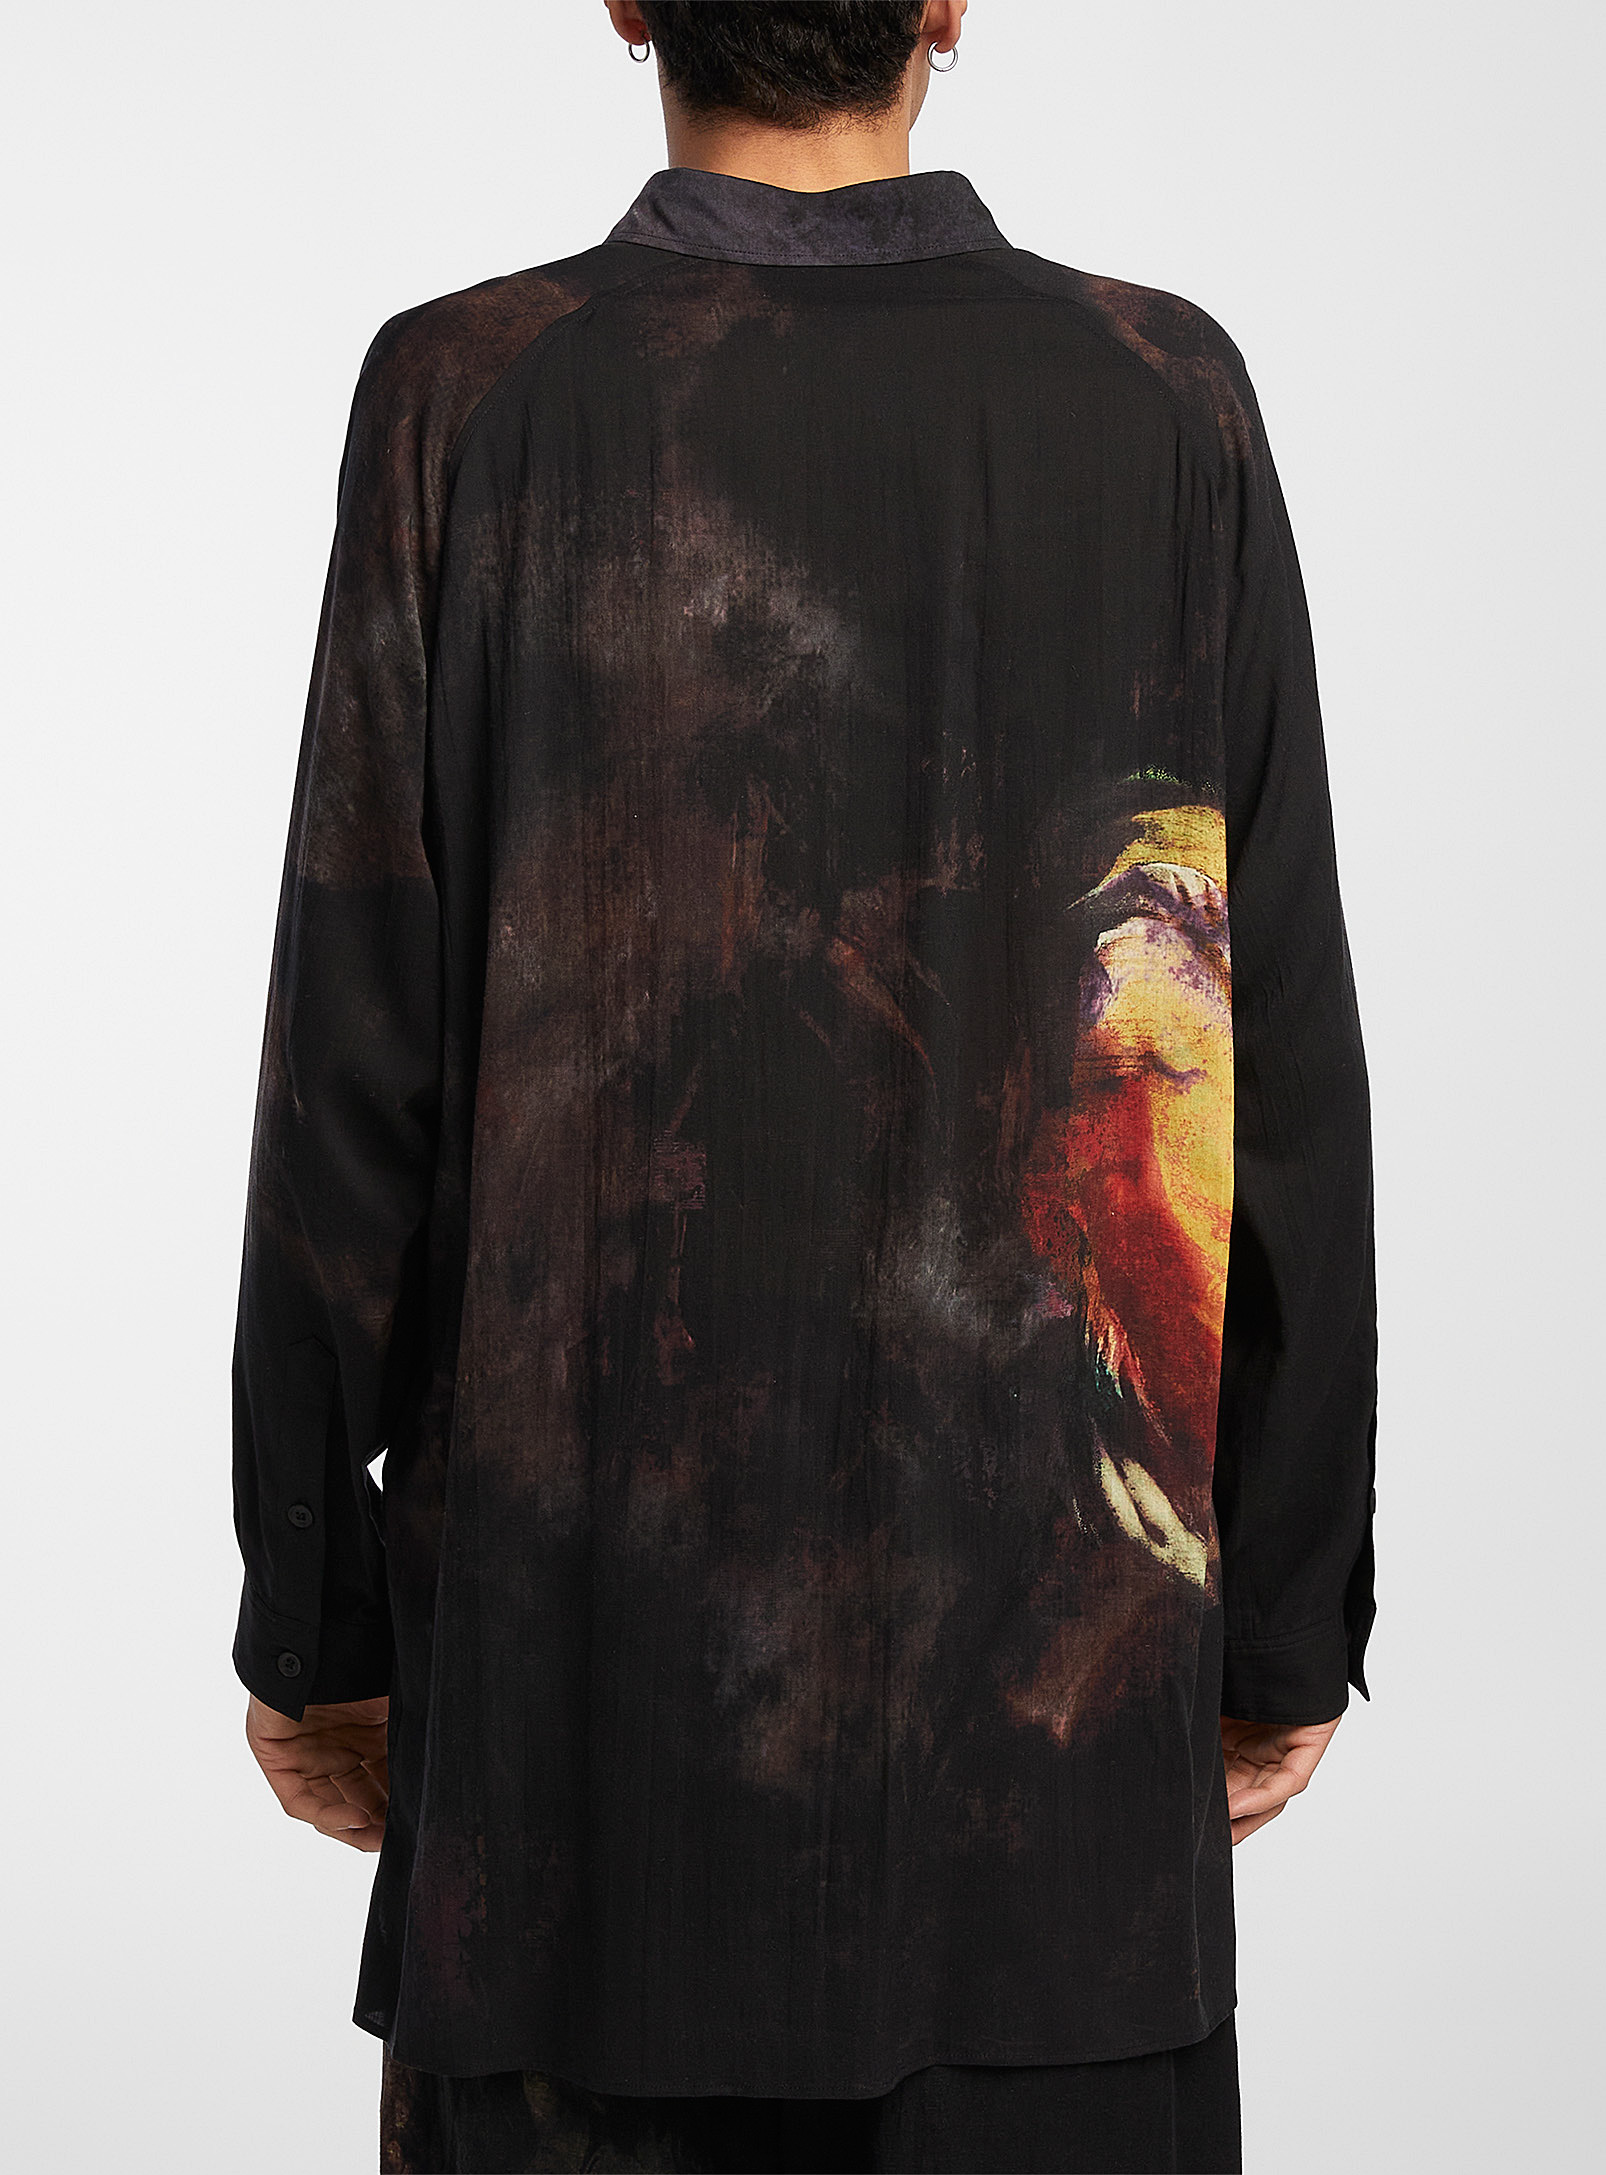 Yohji Yamamoto - La longue chemise imprimé Martyrdom